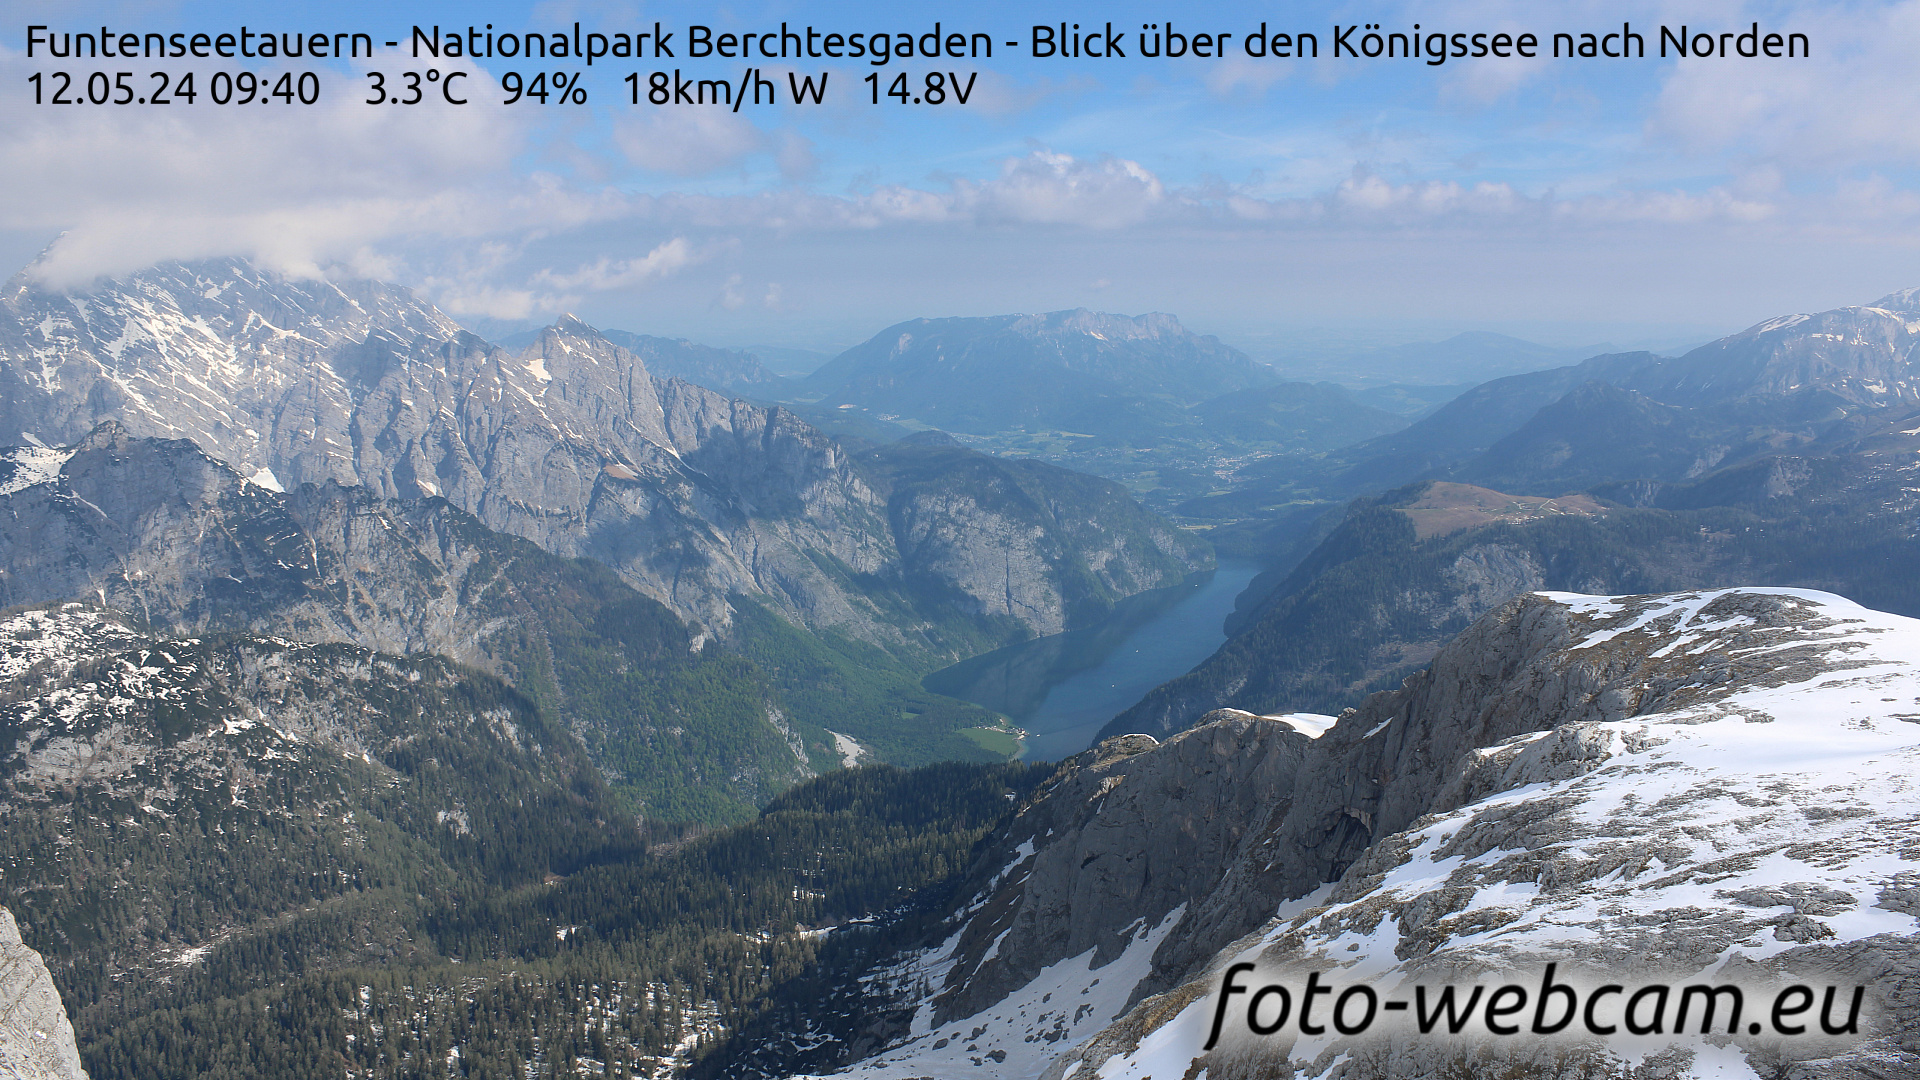 Berchtesgaden Me. 09:48